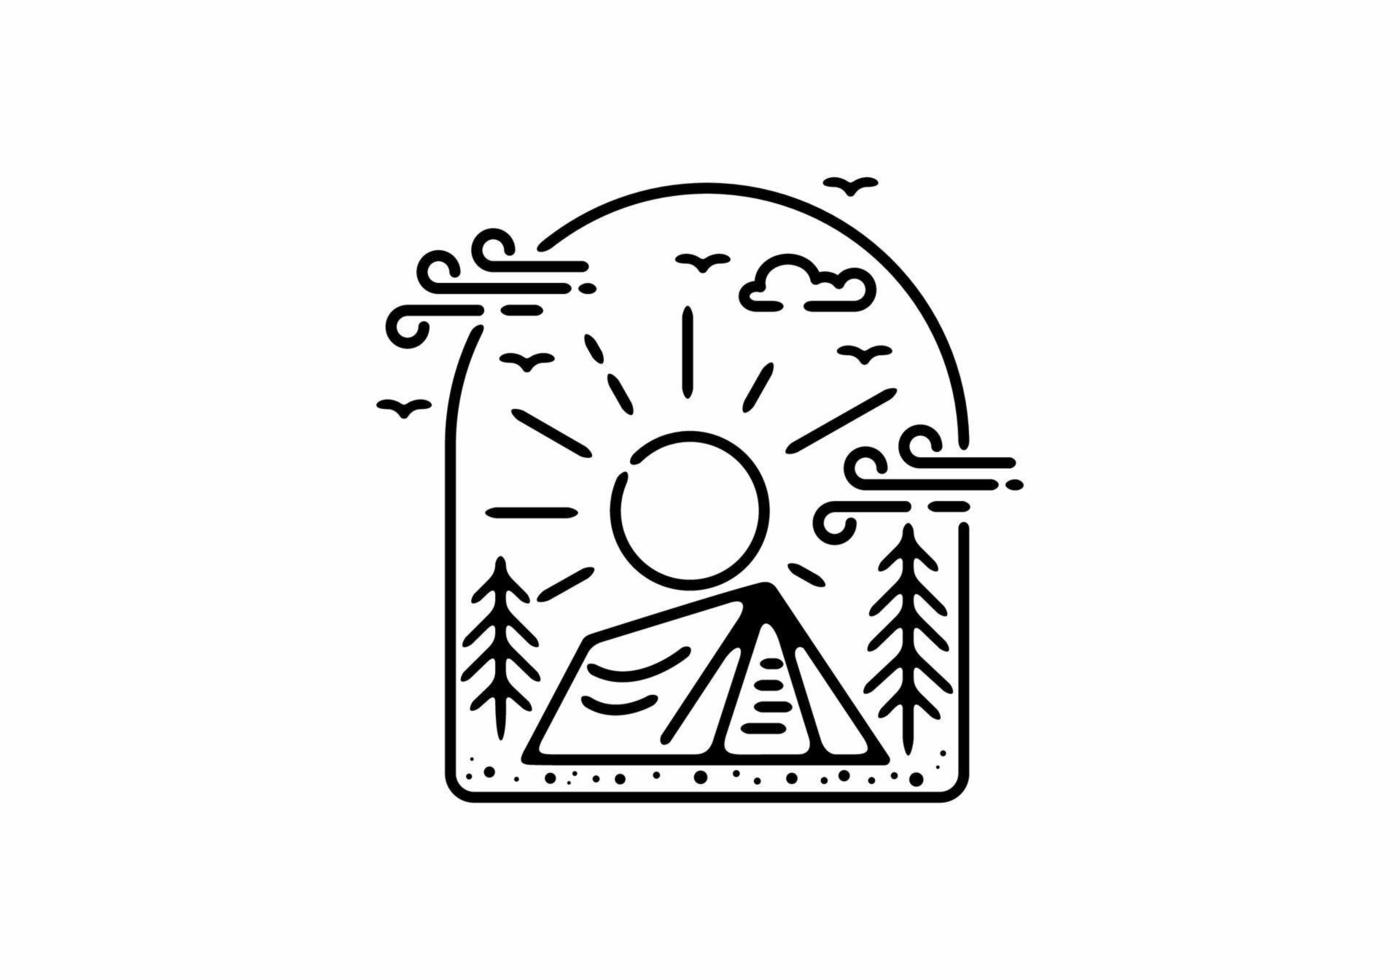 Black line art illustration of camping badge in window frame shape vector